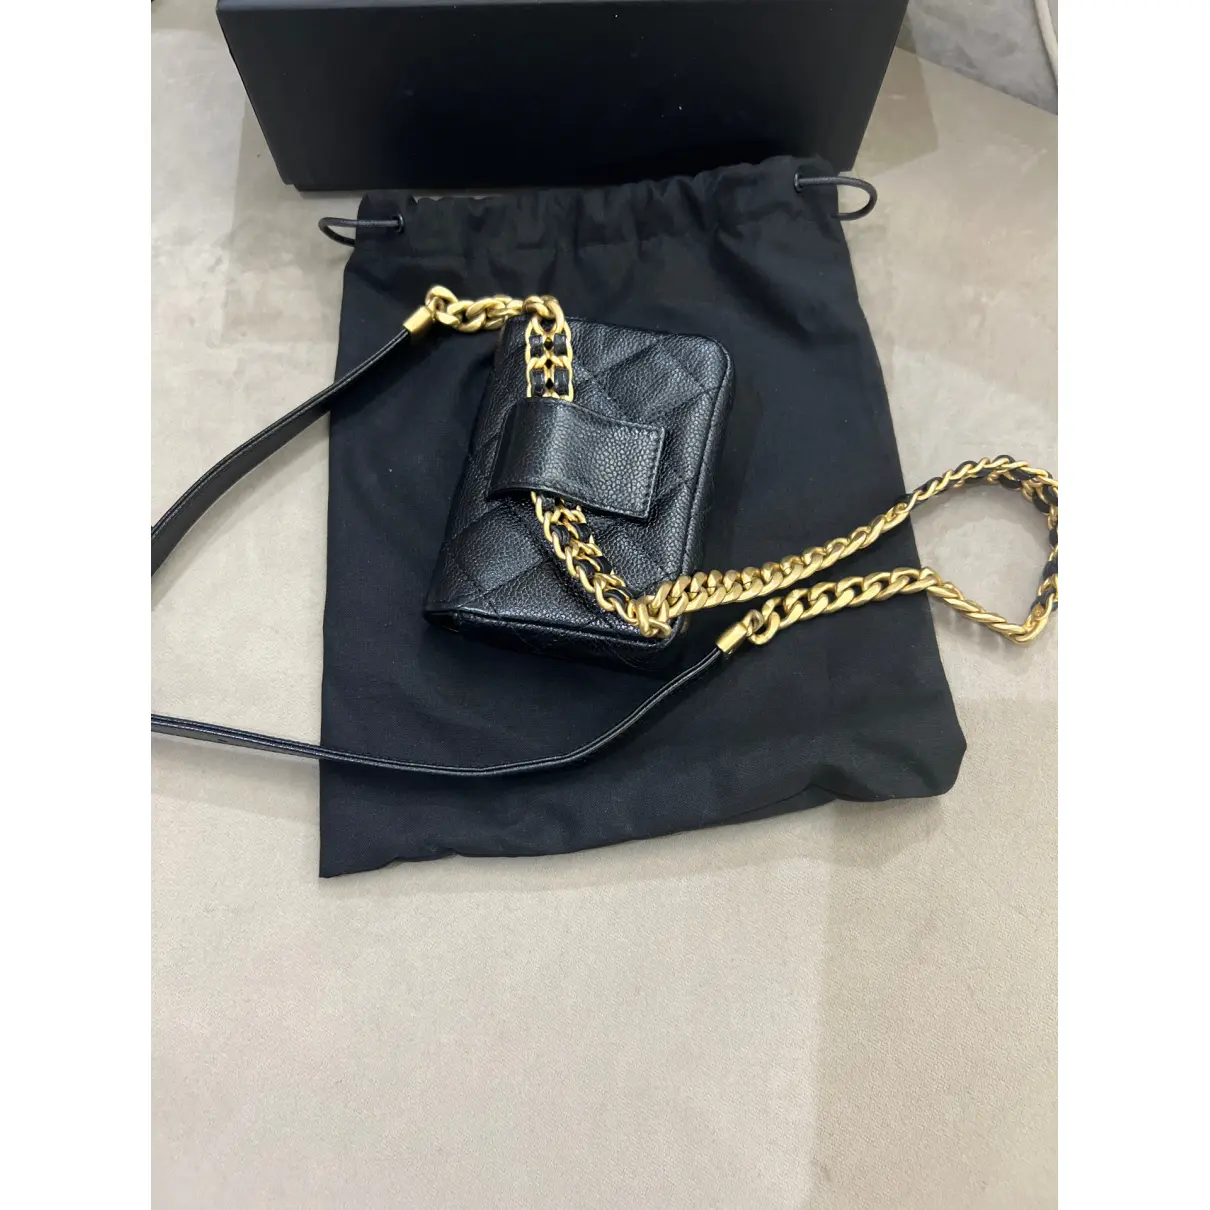 Buy Chanel Leather mini bag online